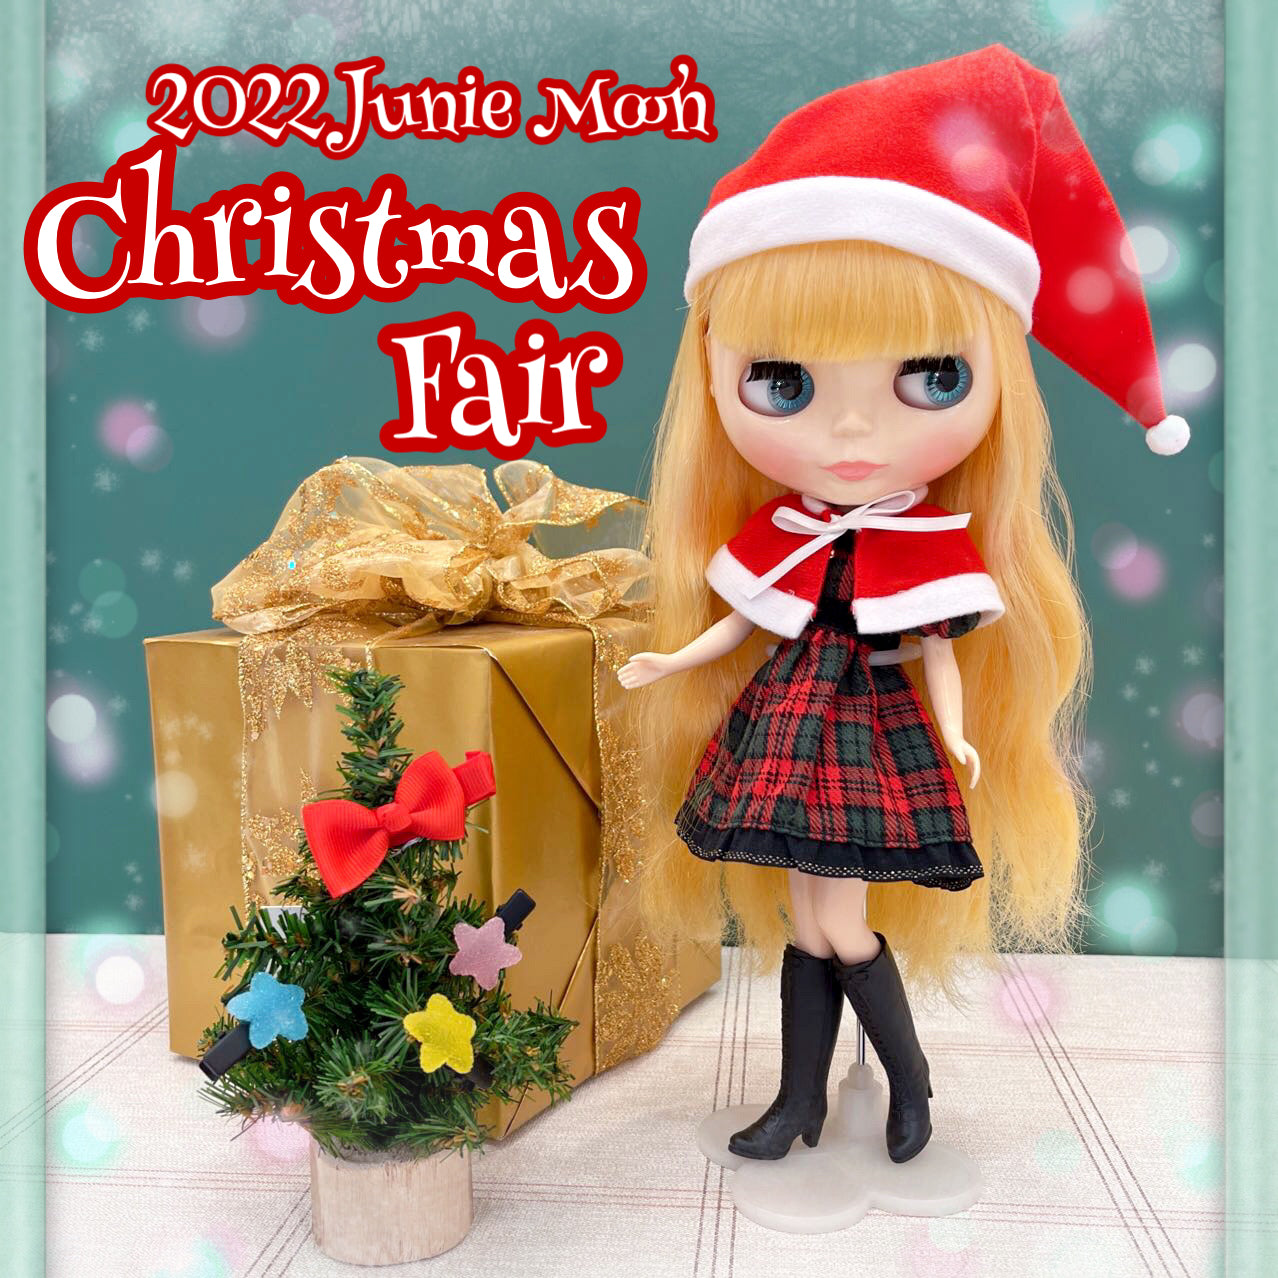 Junie Moon各店にて11月より2022 Junie Moon Christmas Fairがスタートします♪